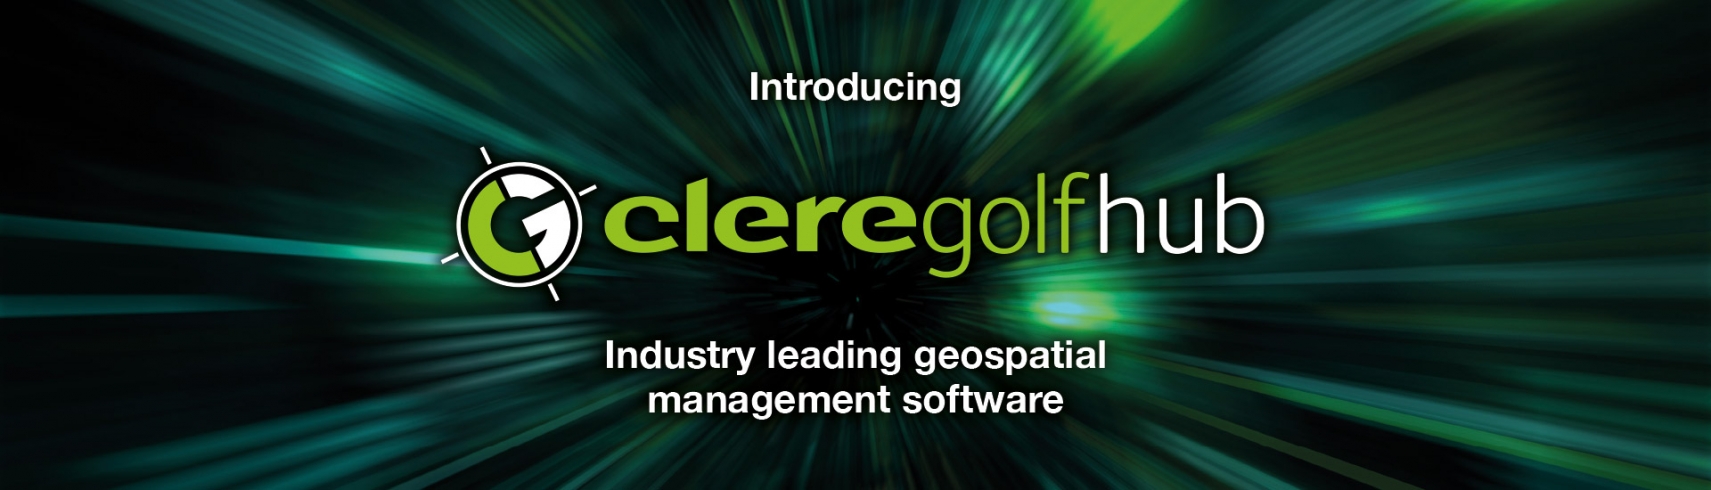 Geospatial Management Software